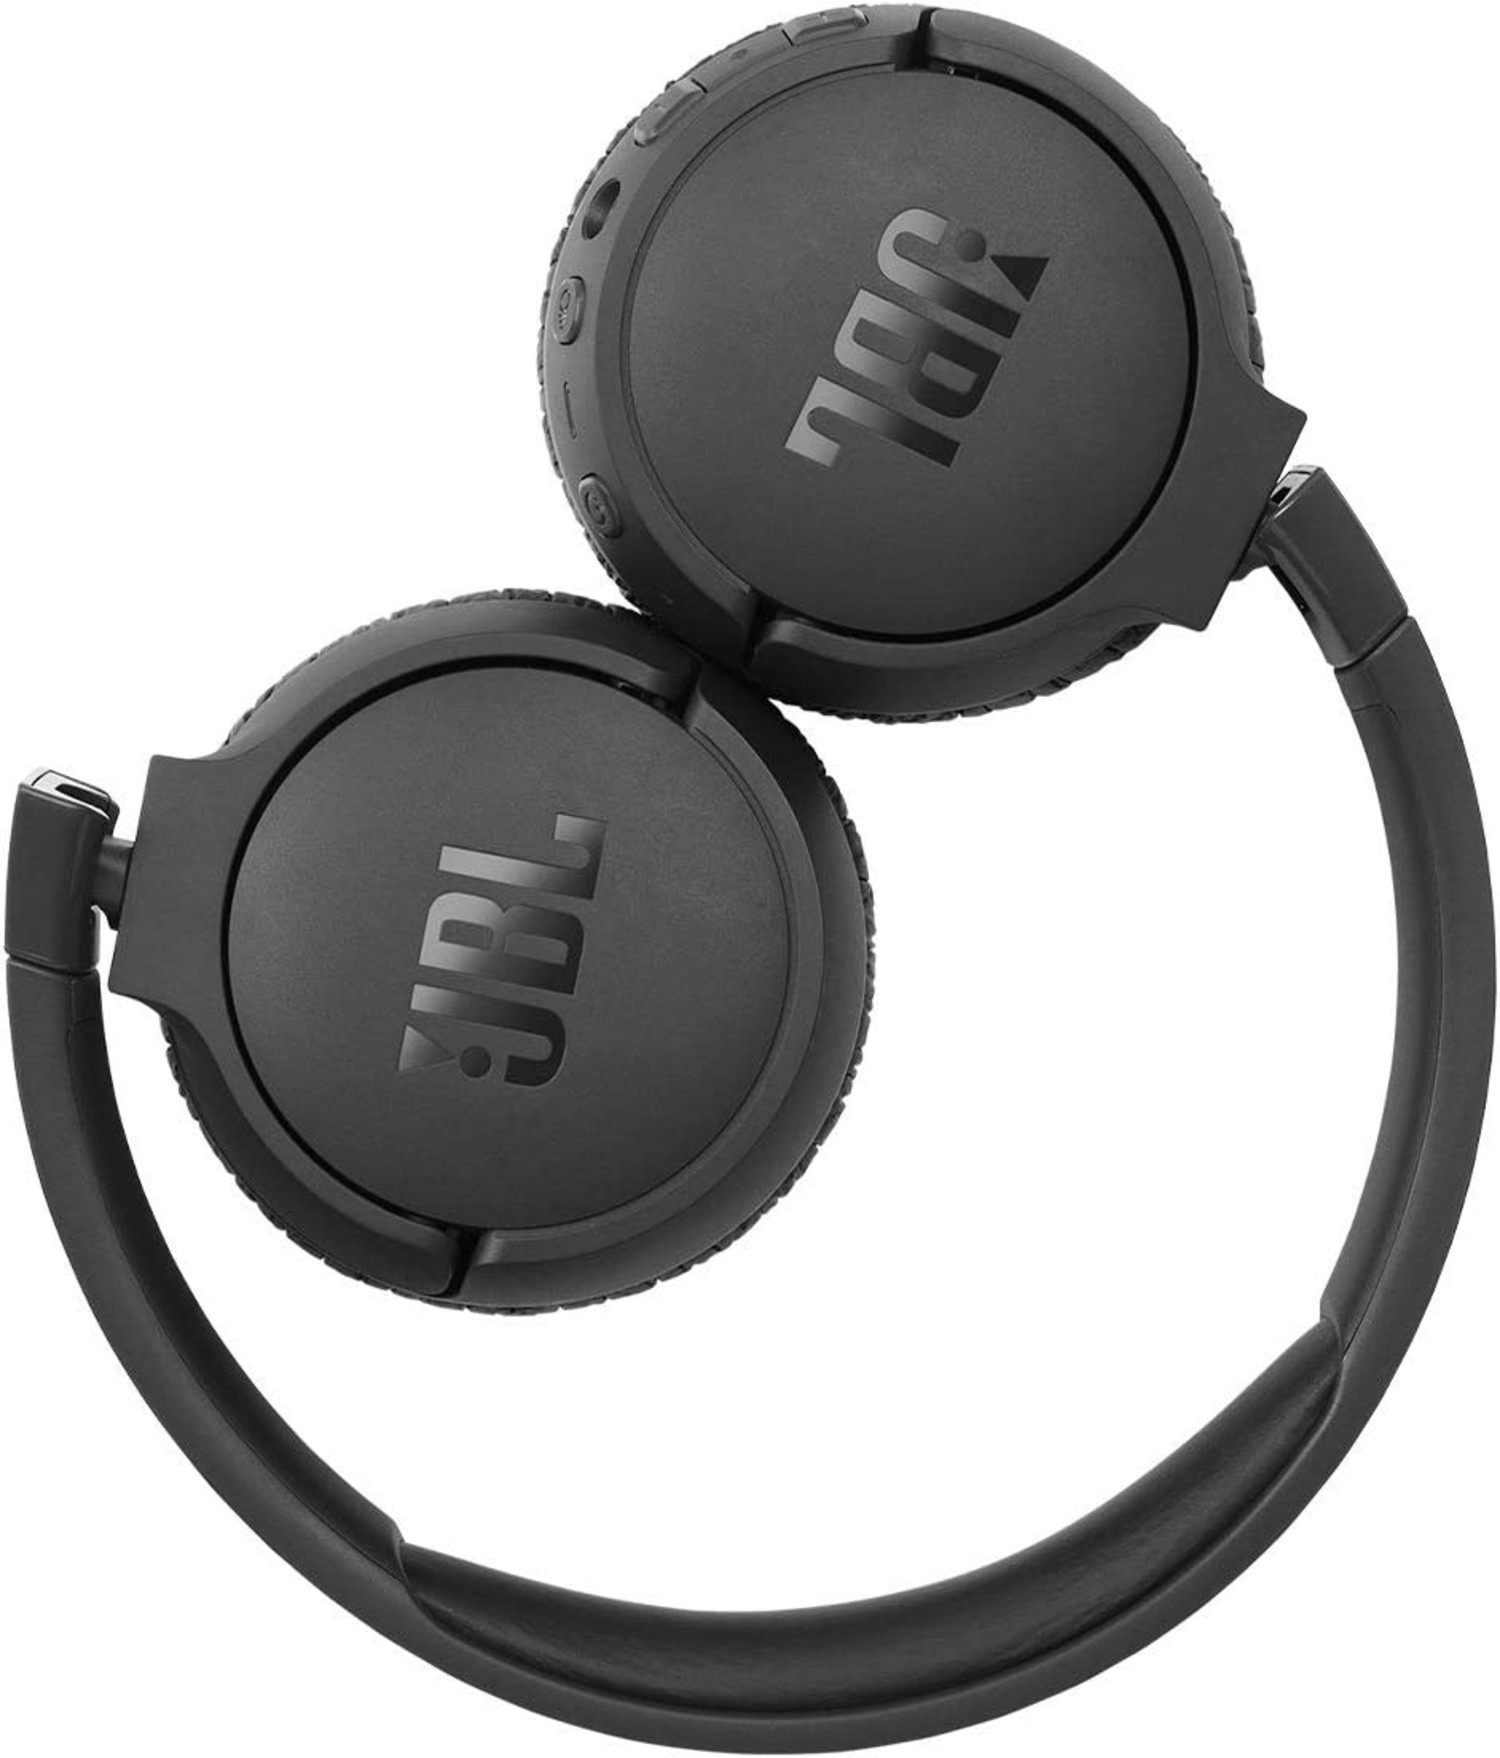 JBL 660NC Noise Cancelling On-Ear Headphones - Black - kite+key, Rutgers Tech Store